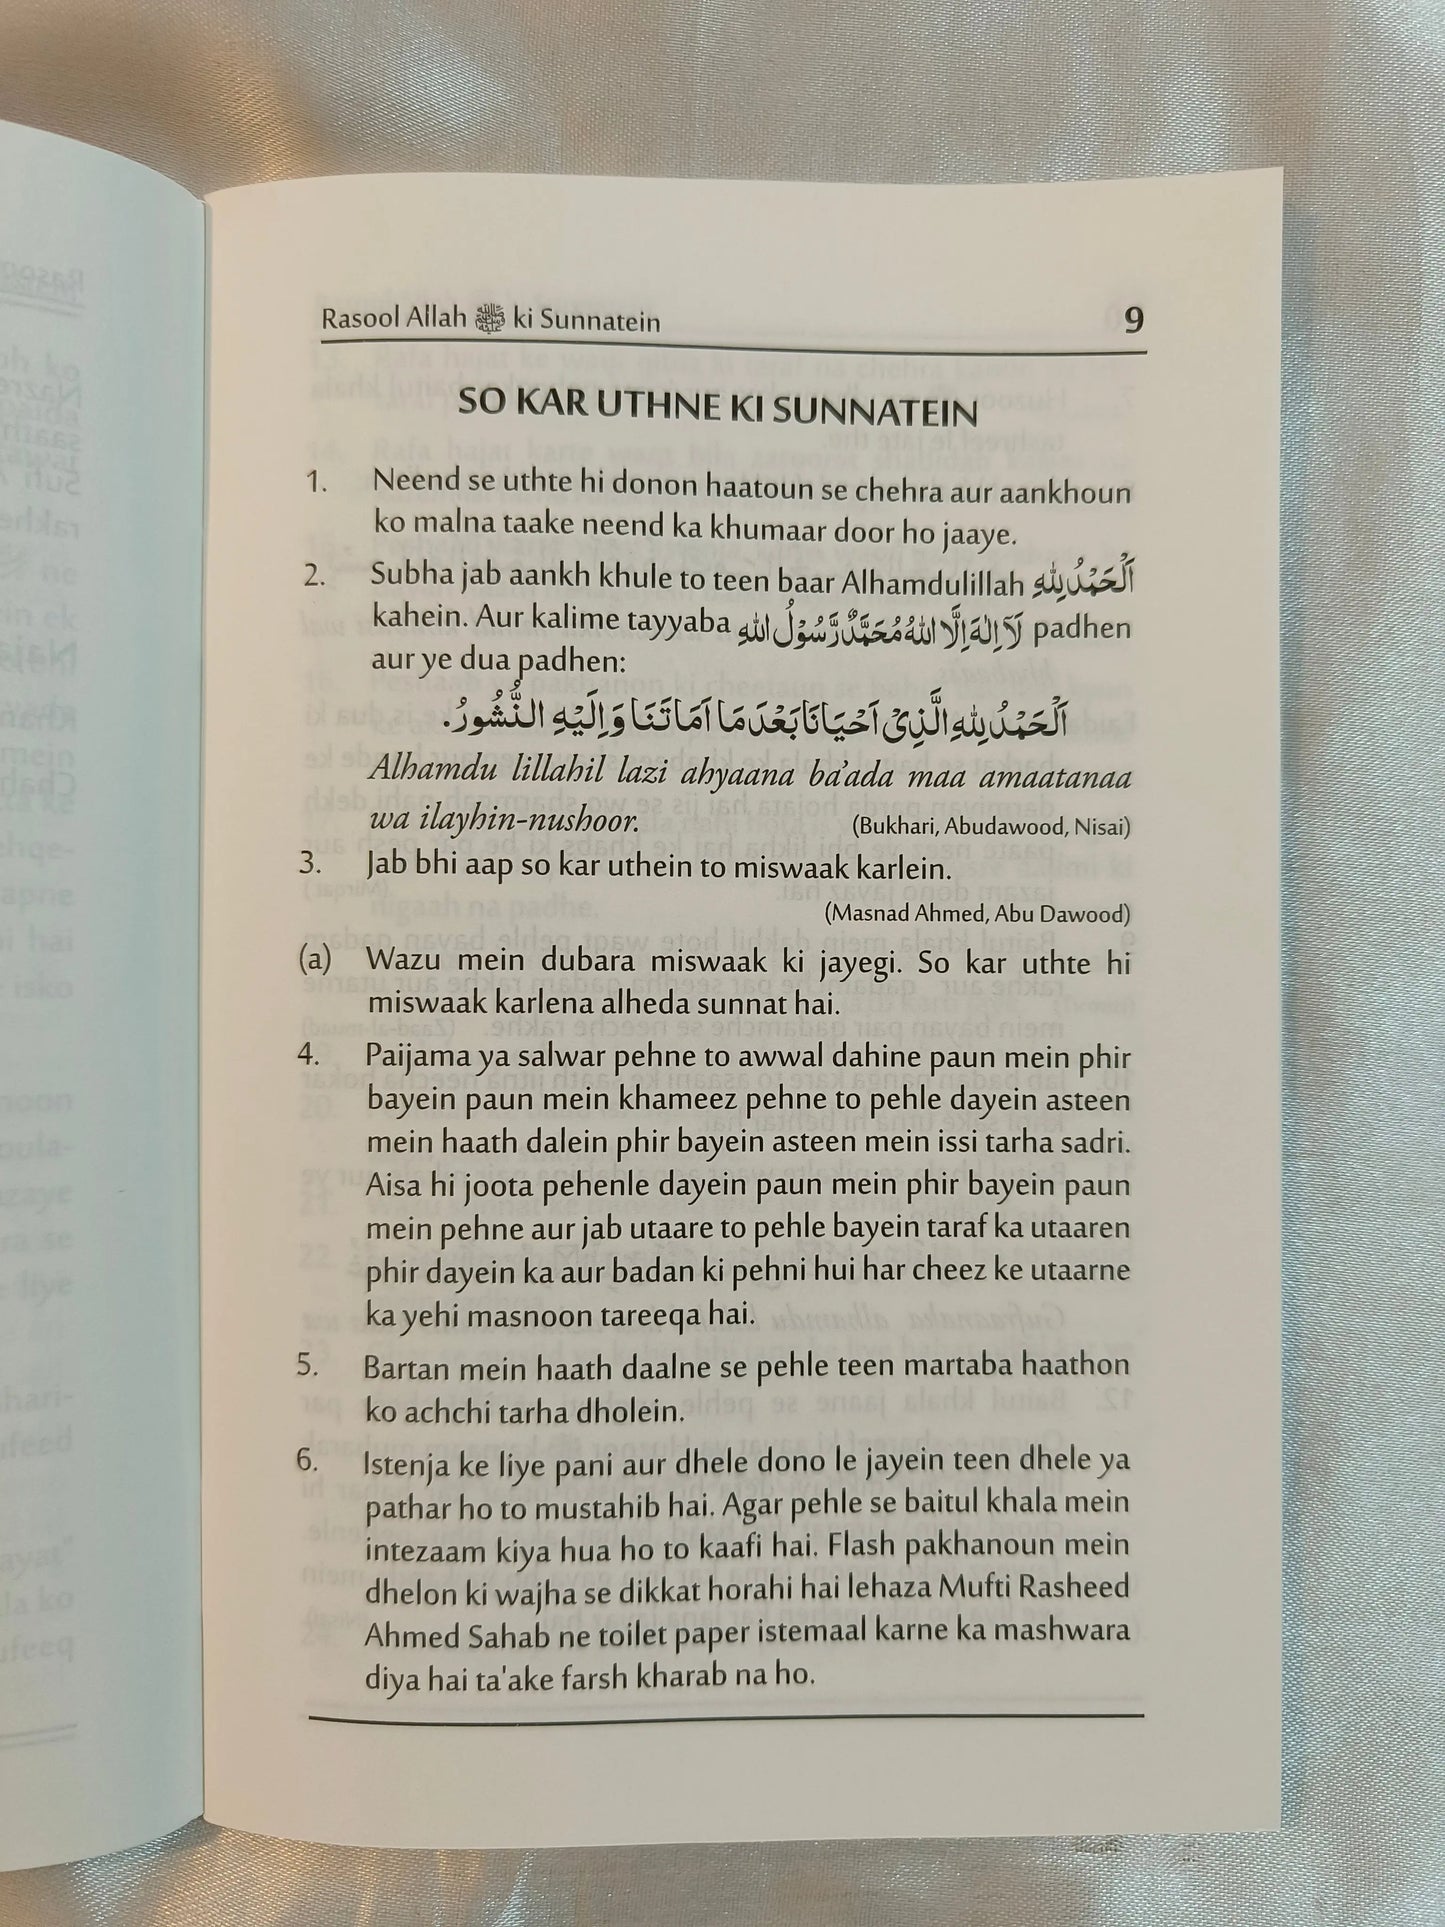 Rasool Allah Ki Sunnatein in Roman English Paperback - alifthebookstore